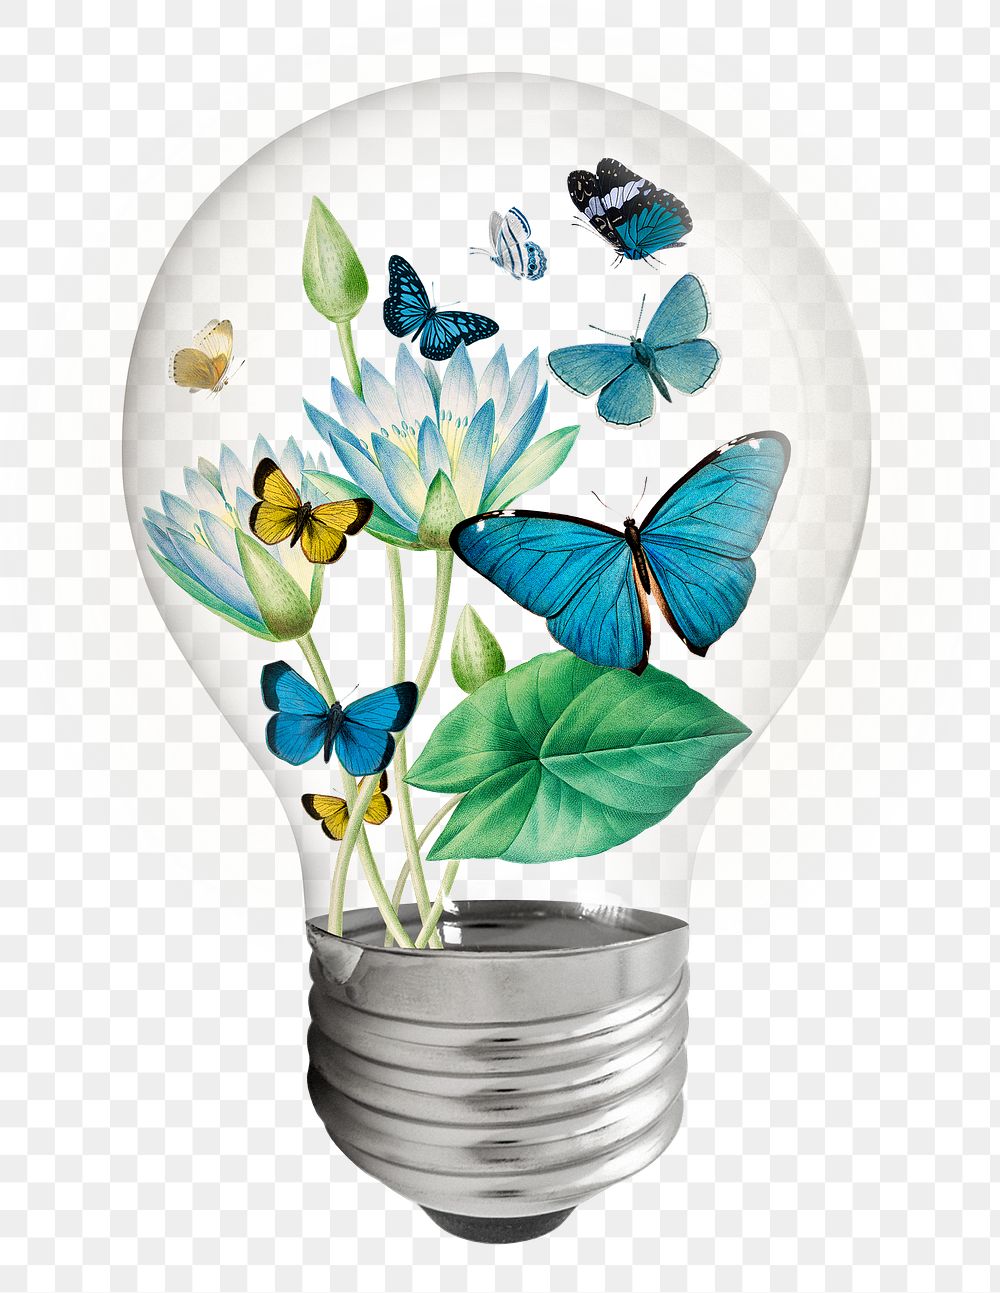 Spring flowers png light bulb, blue botanical graphic on transparent background